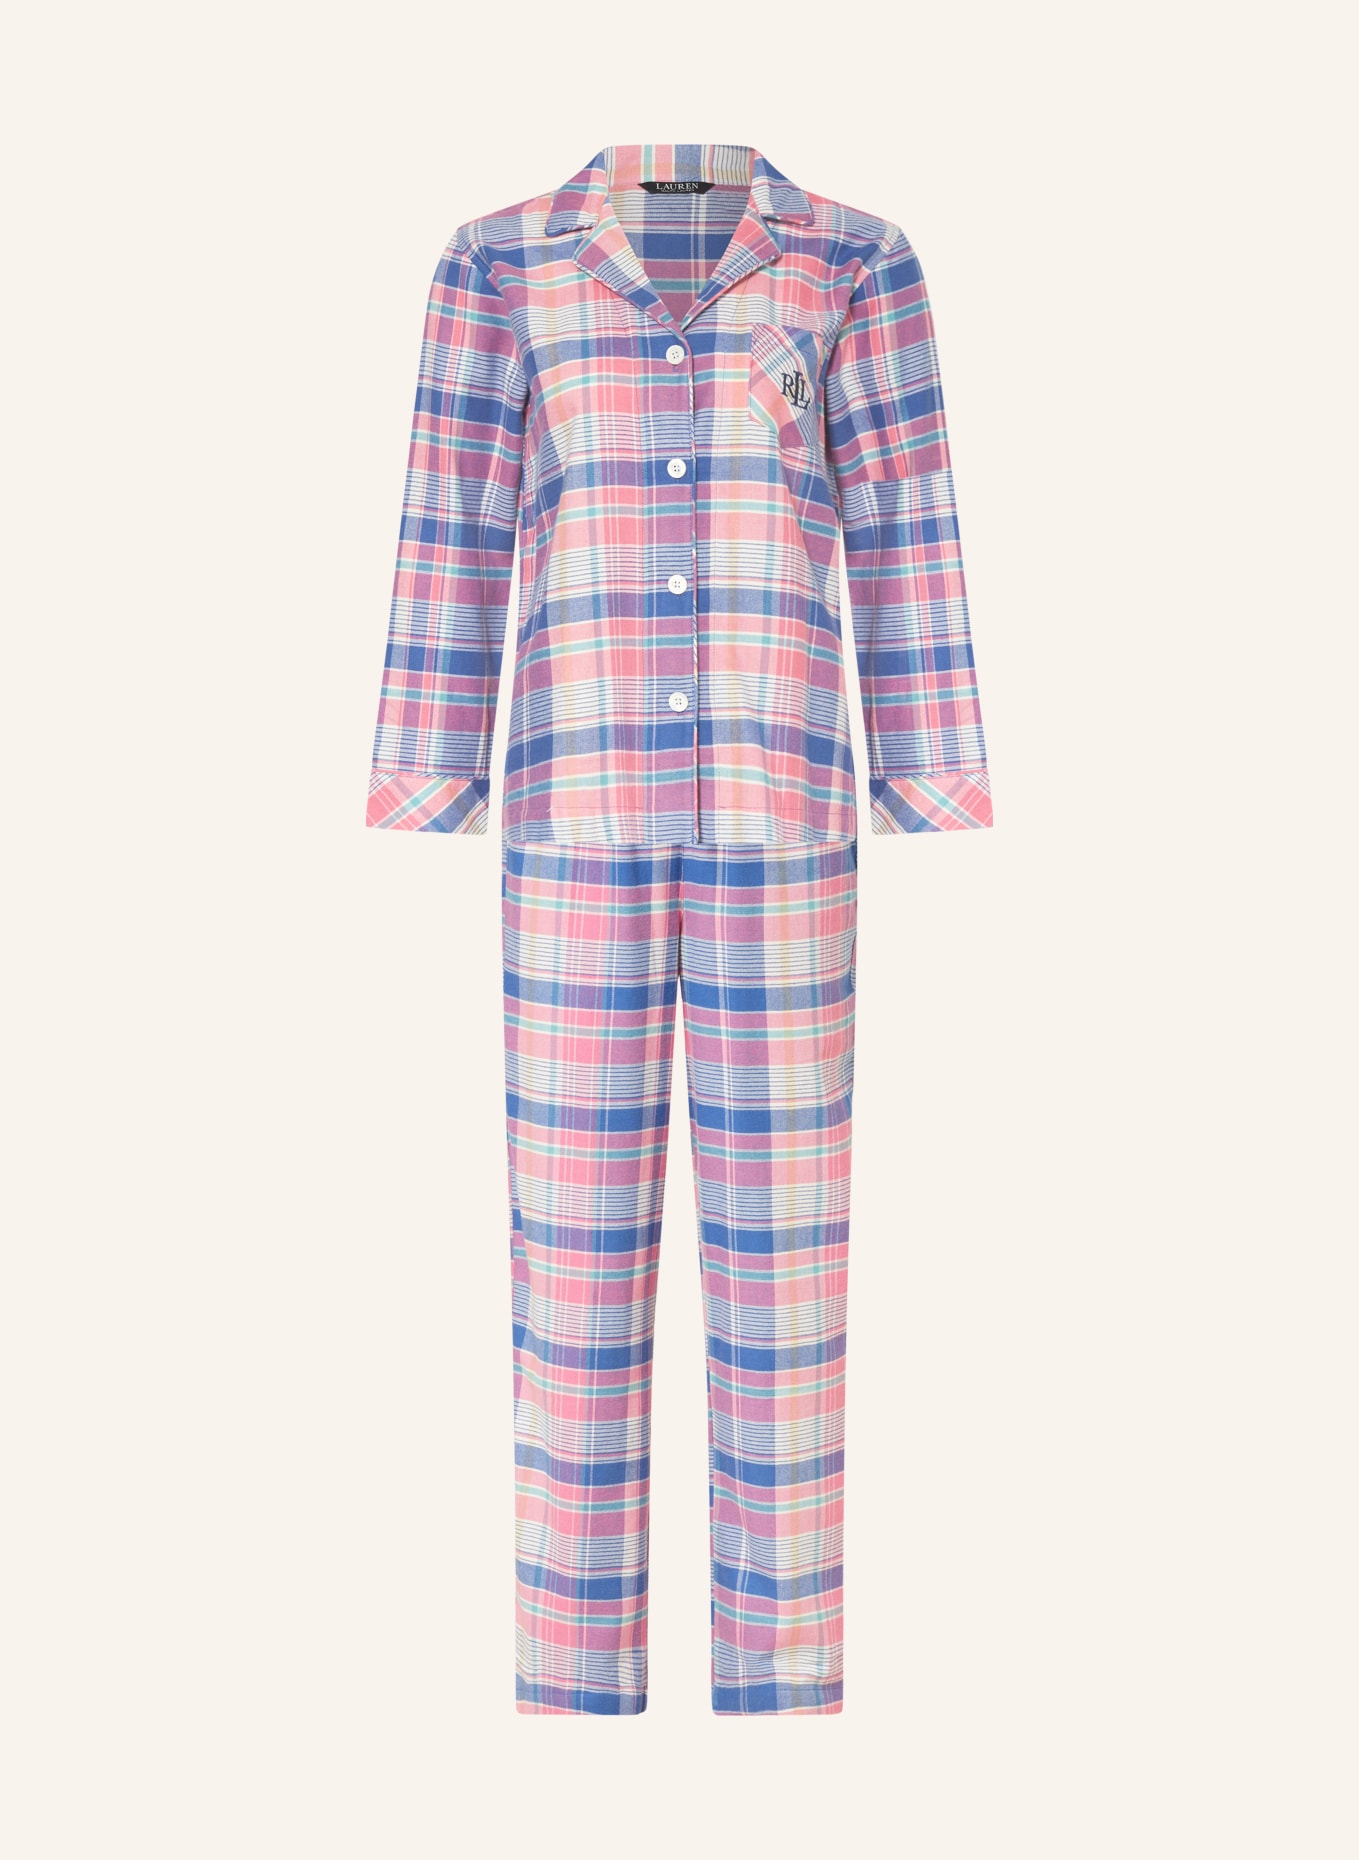 LAUREN RALPH LAUREN Pajamas BRUSHED TWILL in pink/ blue/ white